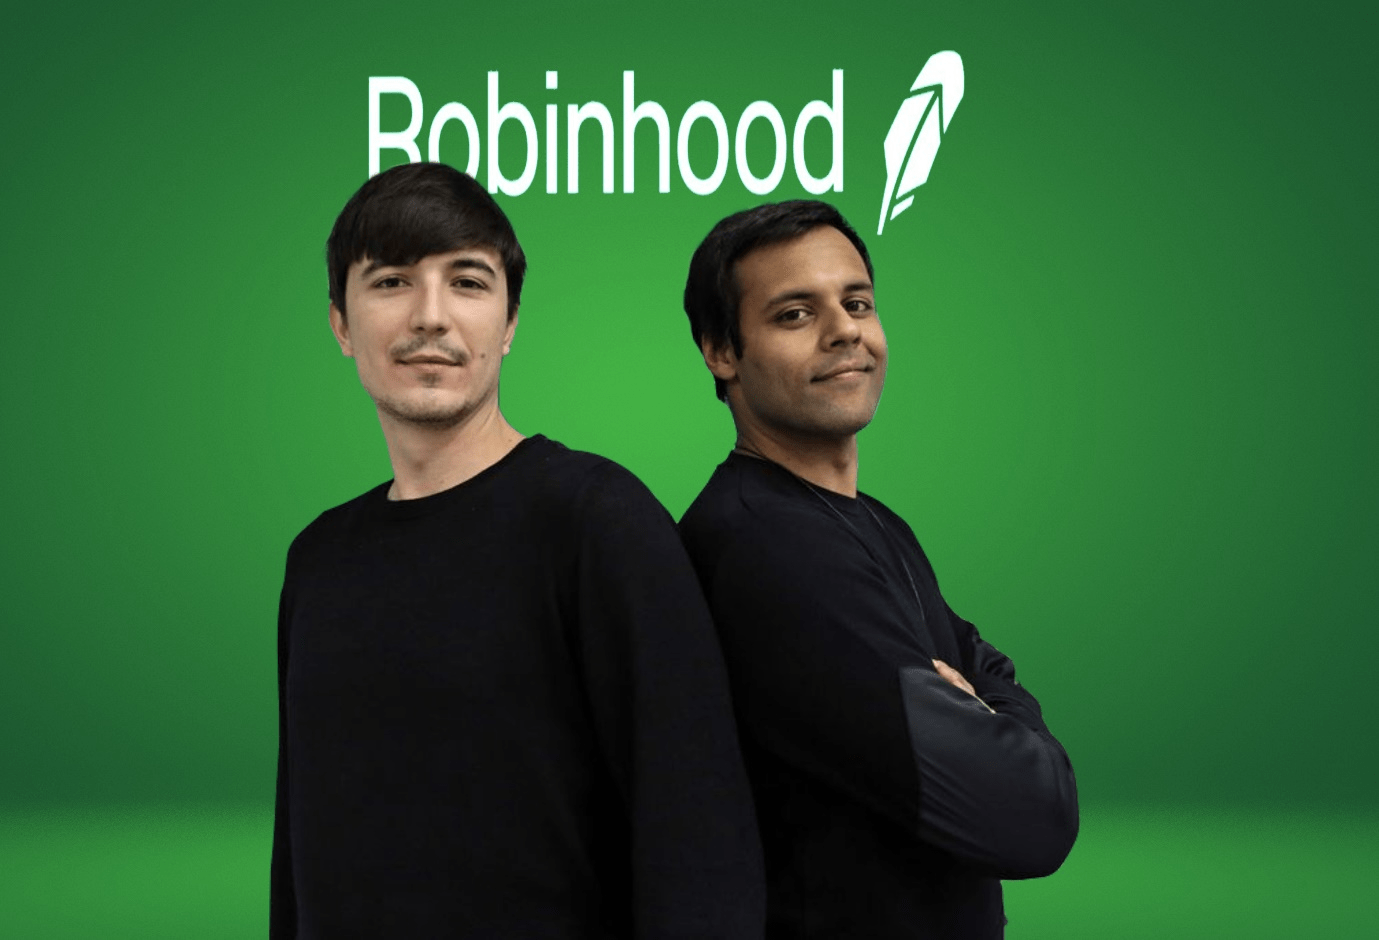 Robinhood co-founders are preparing for massive IPO